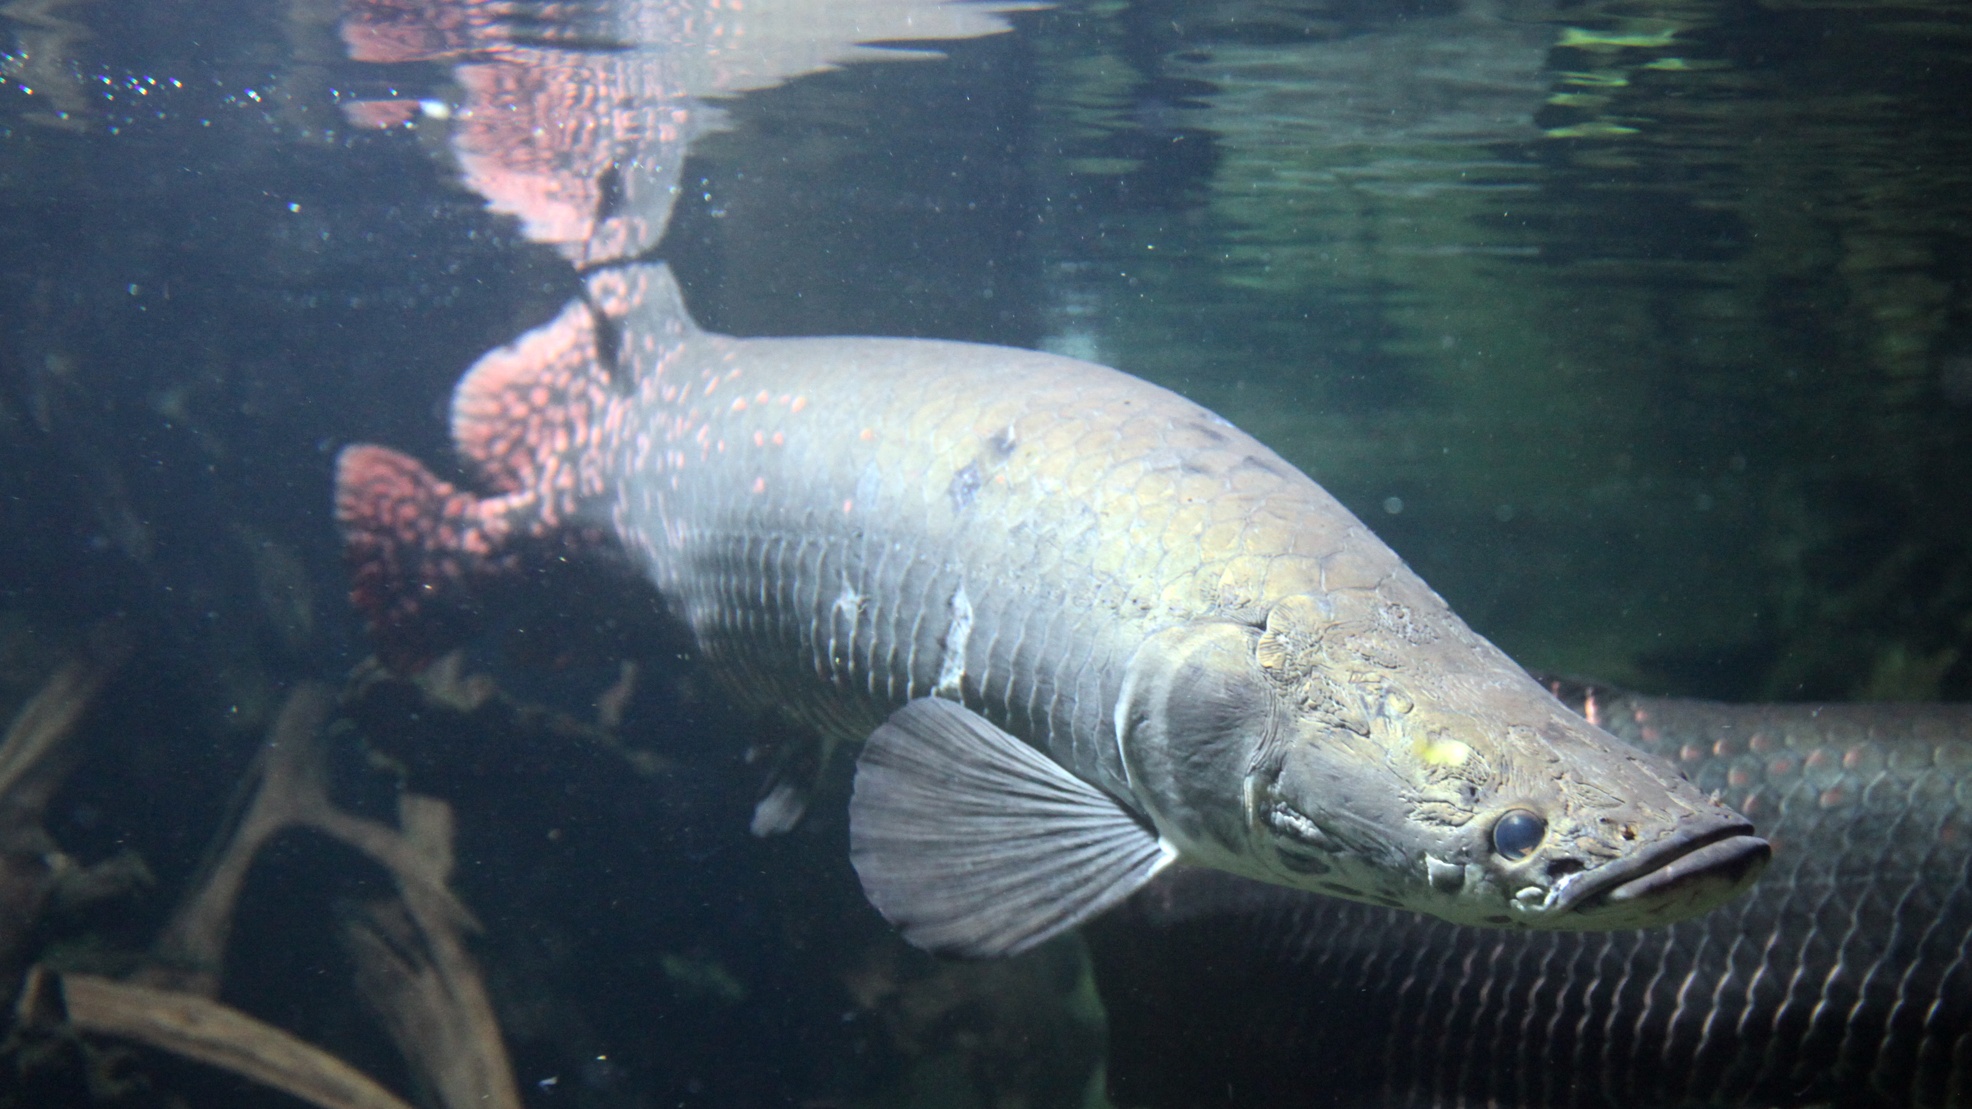 Mengenal Ikan Predator Arapaima yang Dilepas di Sungai Brantas